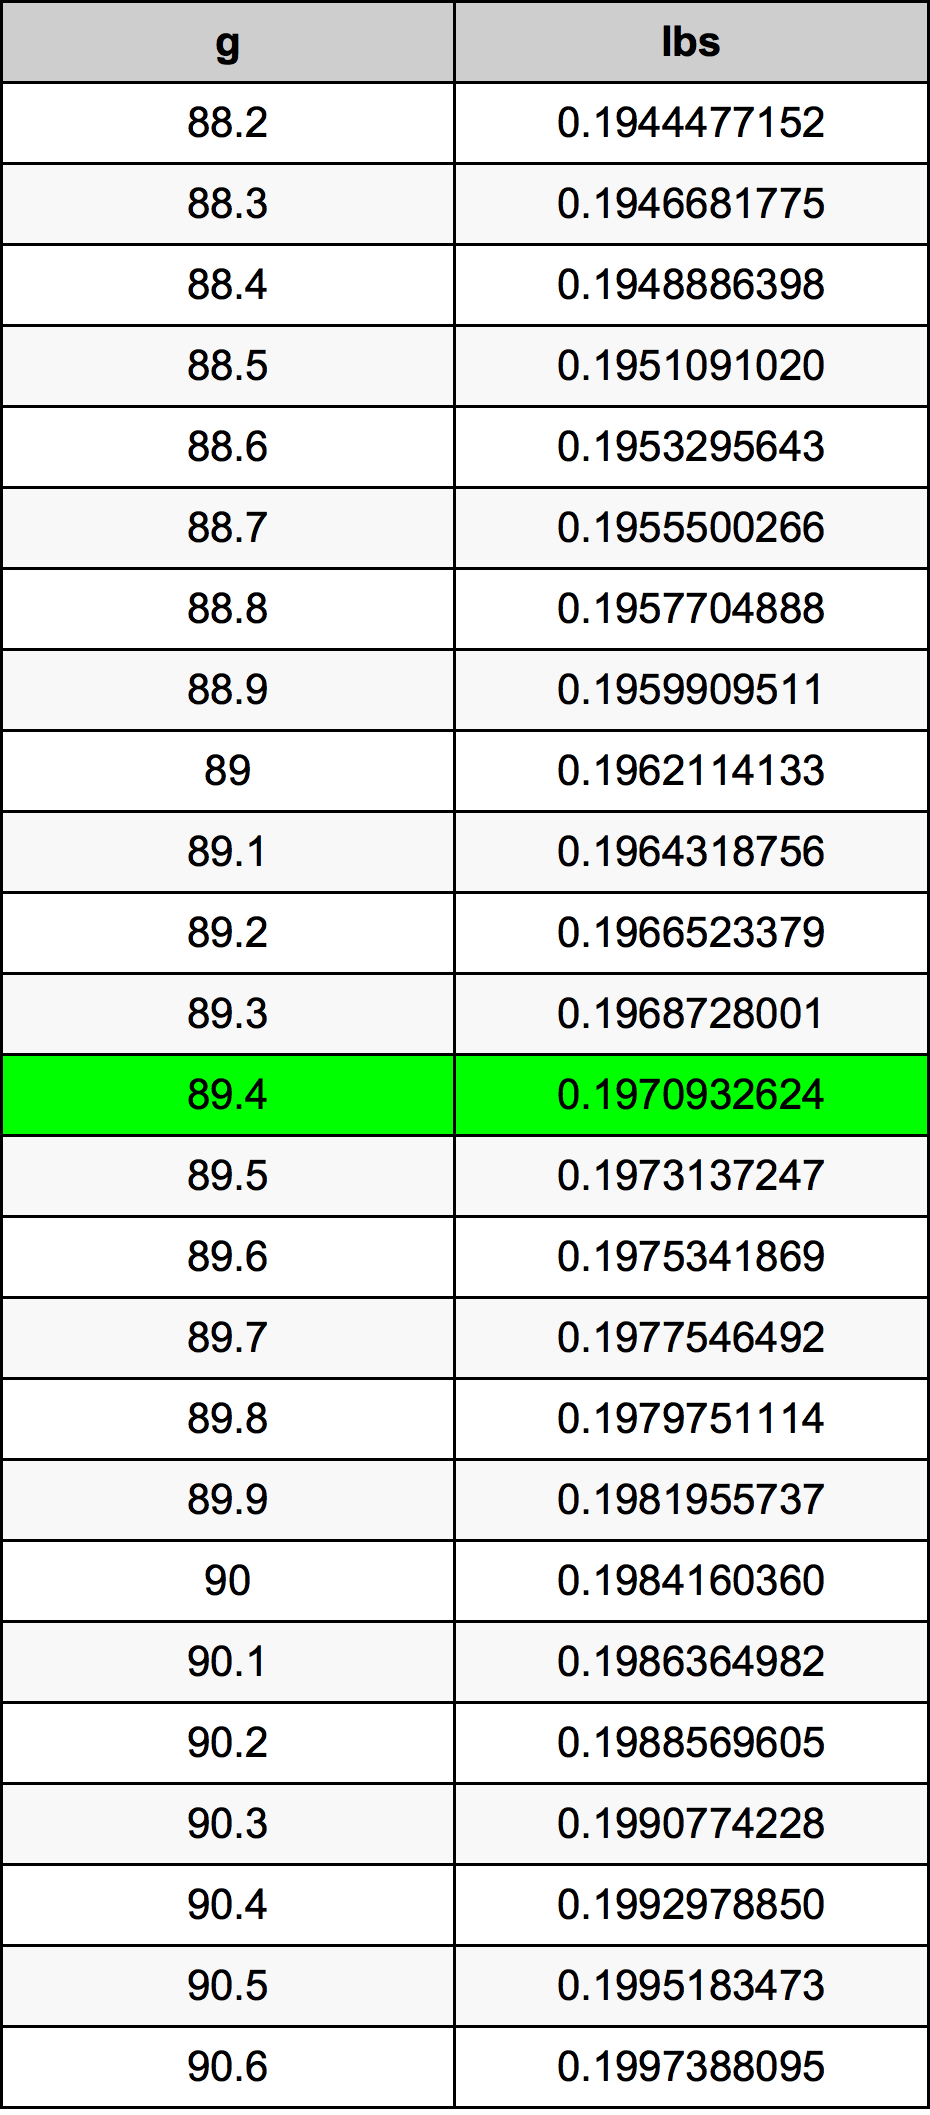 89.4 غرام جدول تحويل